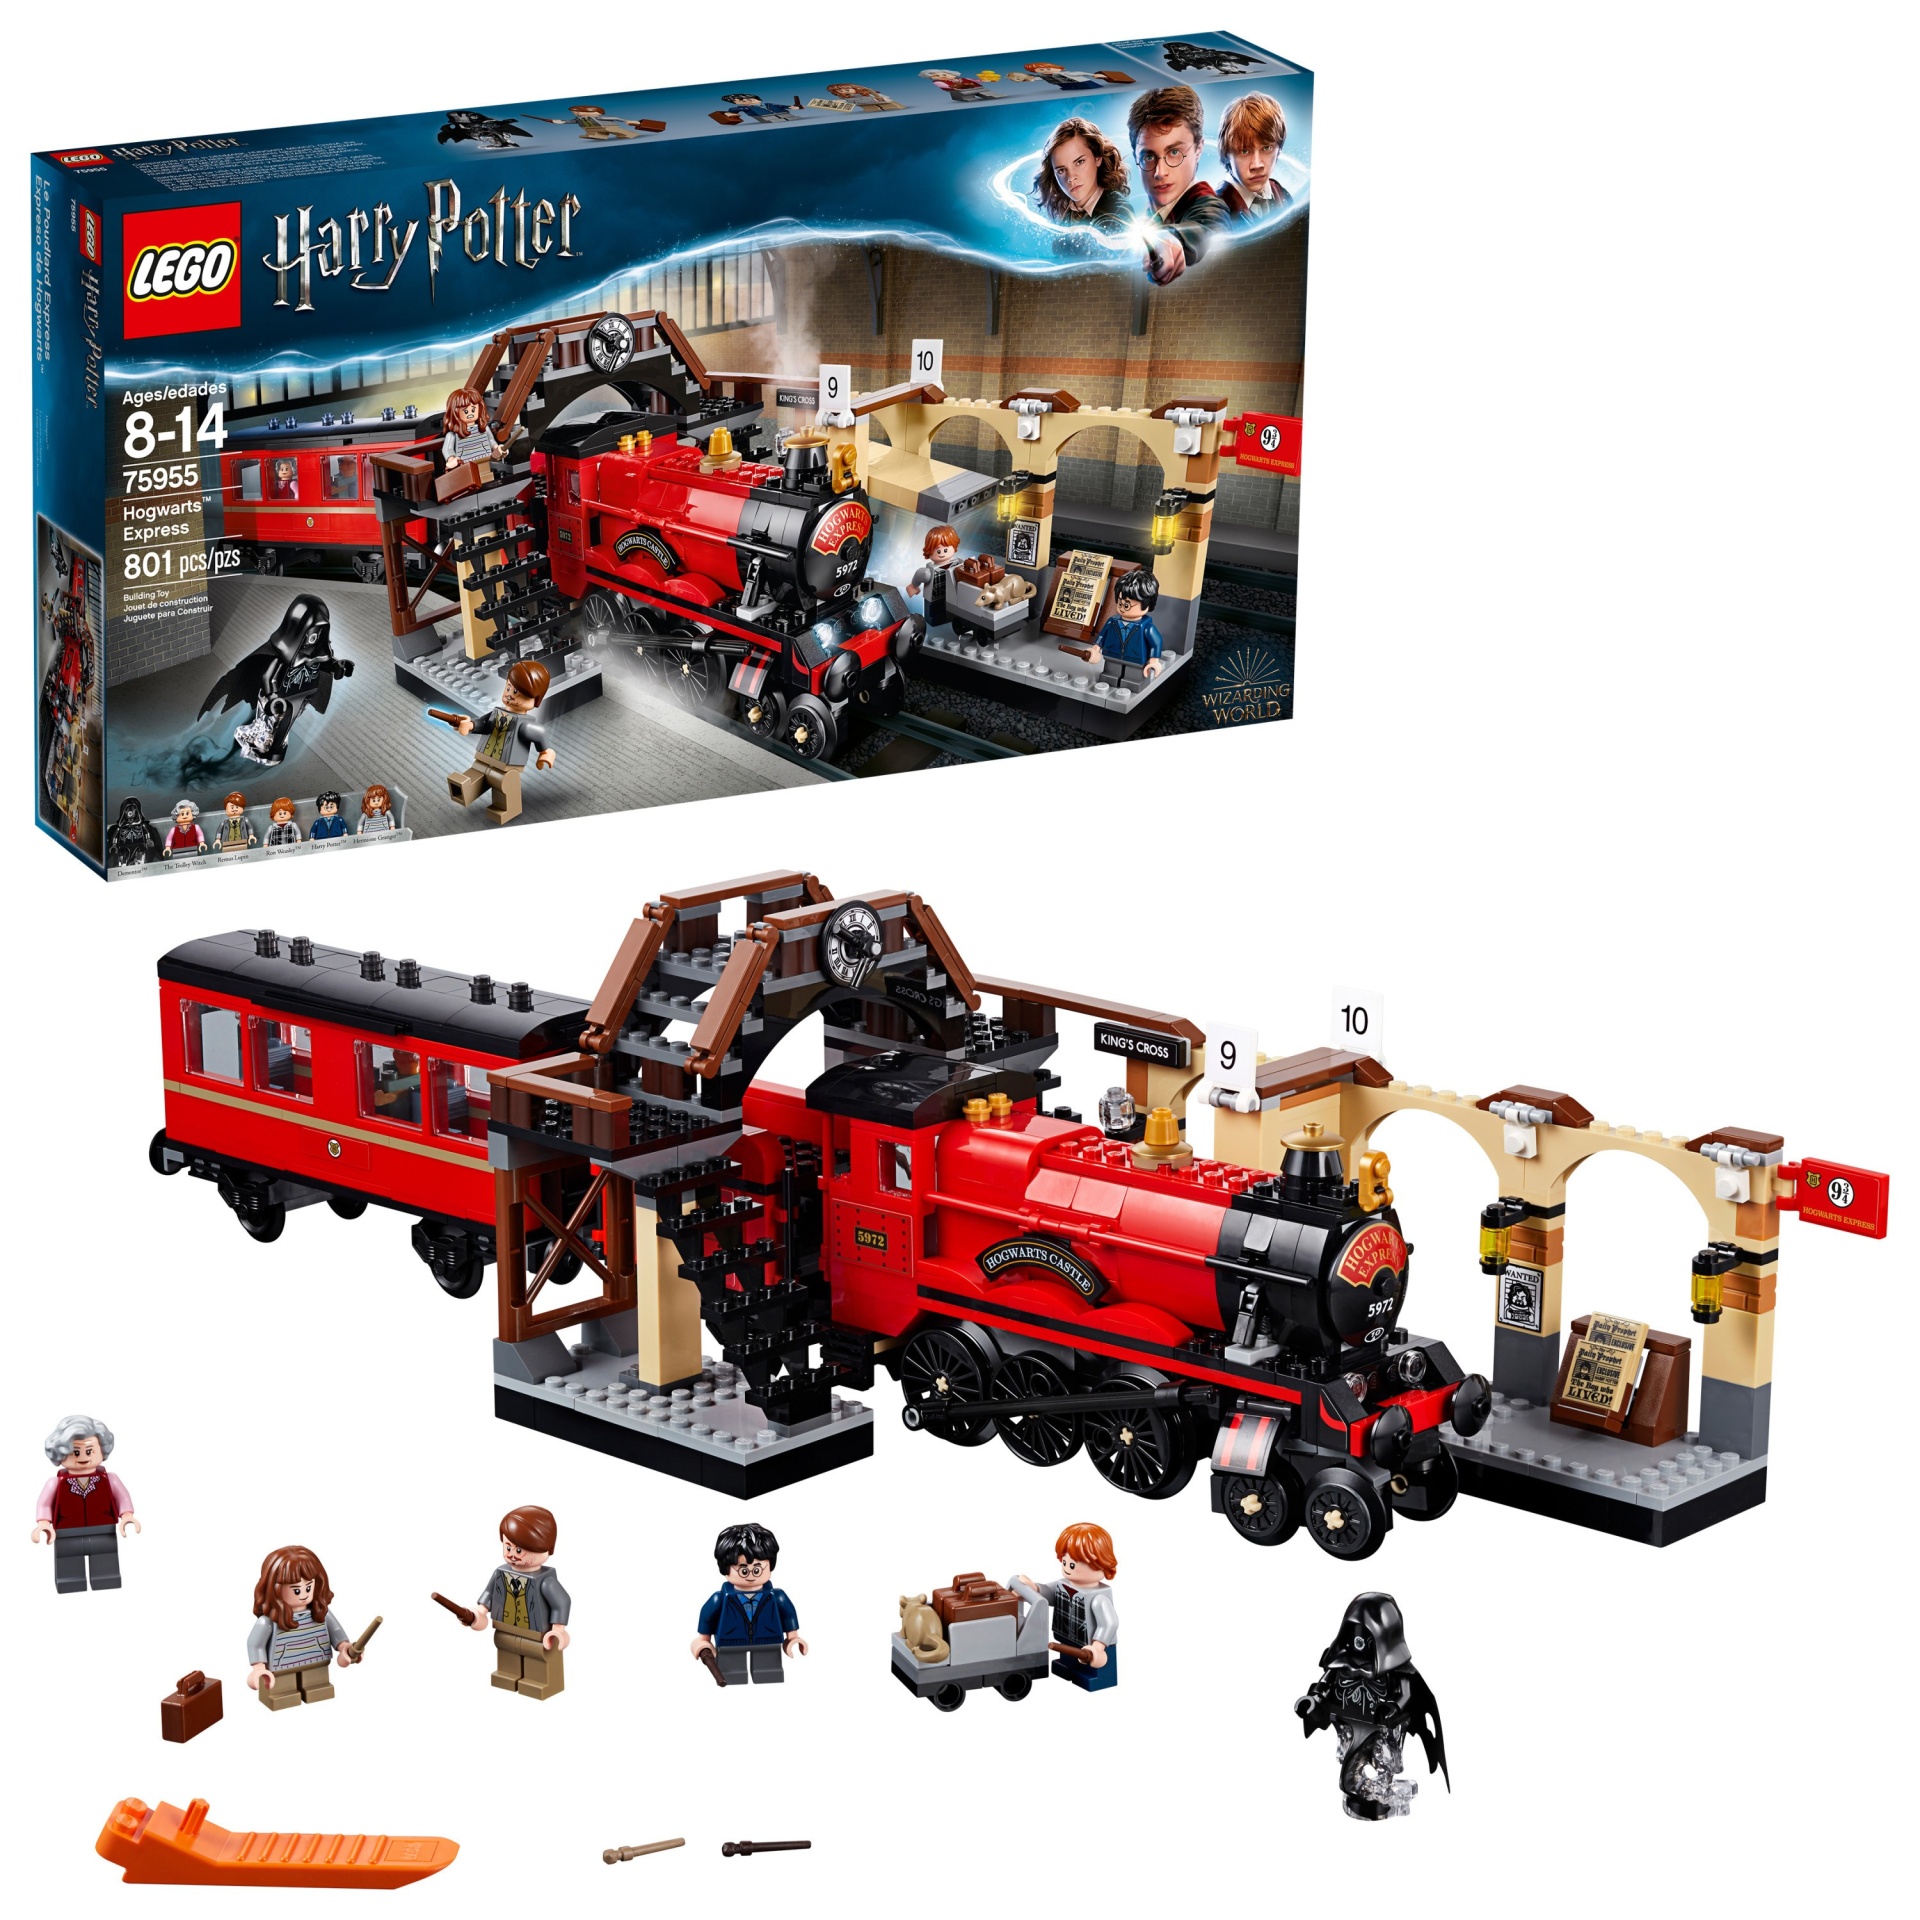 slide 1 of 10, LEGO Harry Potter Hogwarts Express Train Set with Harry Potter Minifigures and Toy Bridge 75955, 1 ct